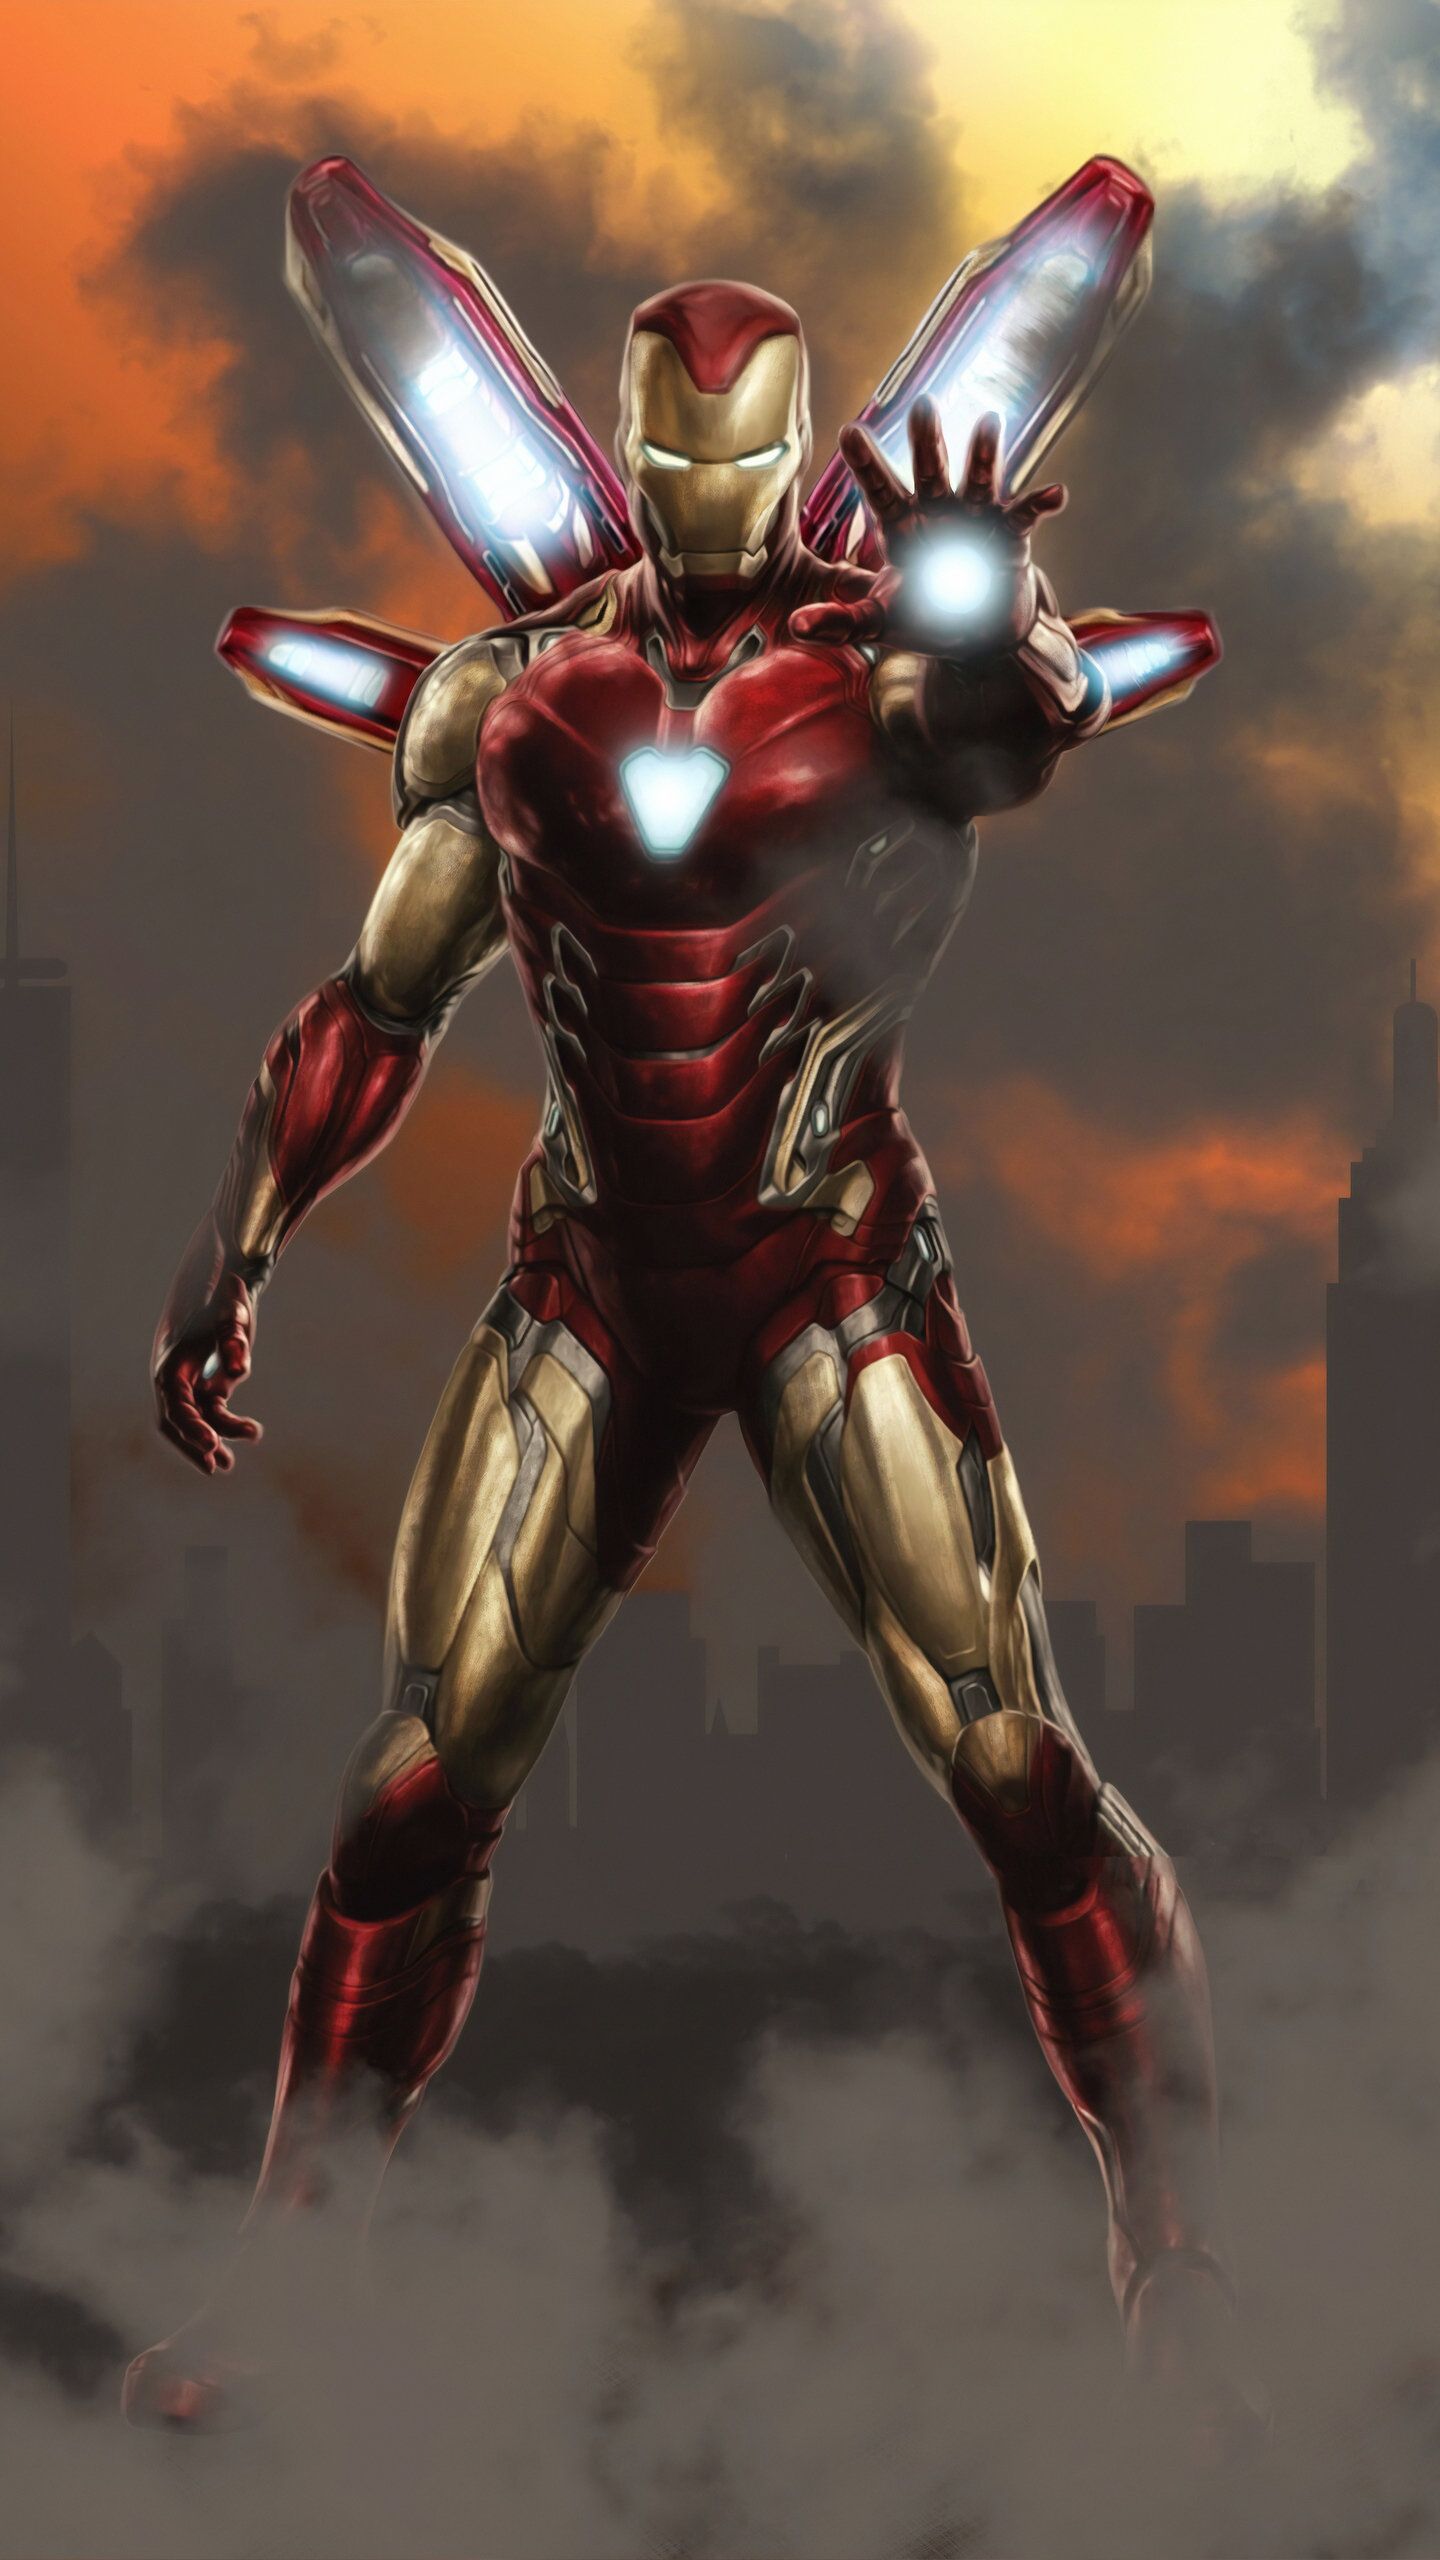 New Suit Iron Man, HD Superheroes Wallpaper Photo and Picture. Iron man HD wallpaper, Iron man wallpaper, Iron man avengers